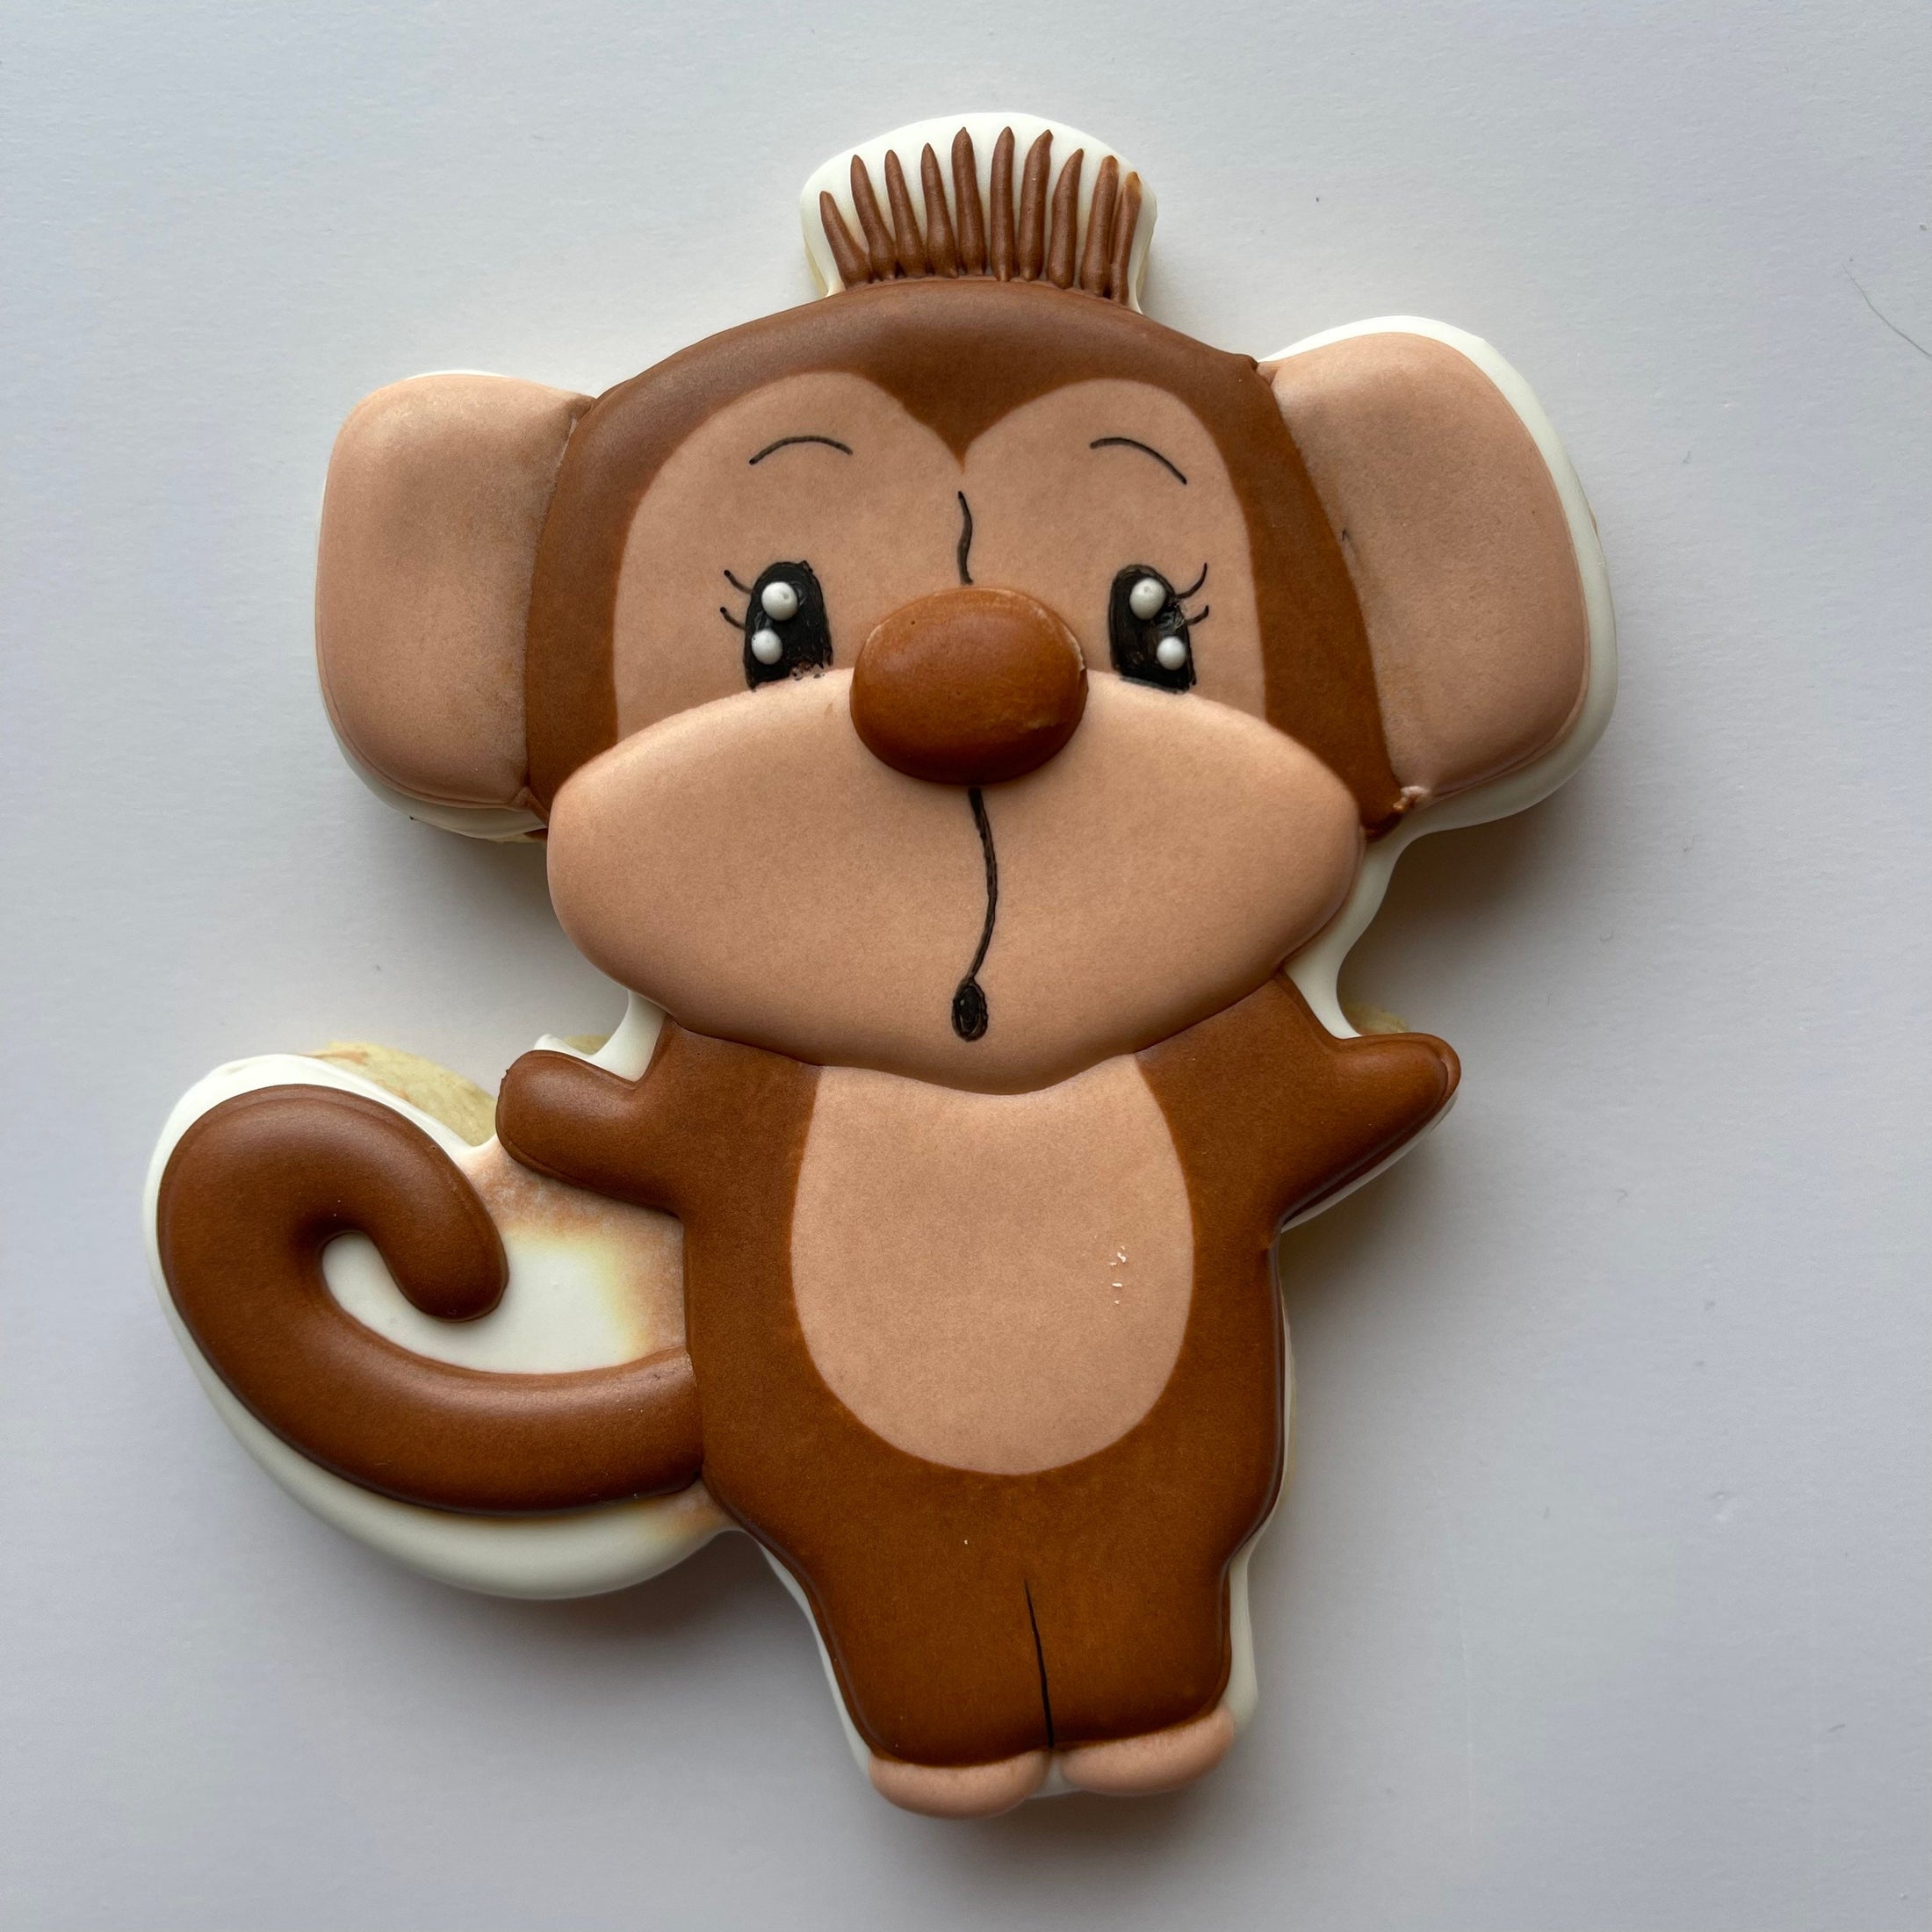 Monkey cookie cutter